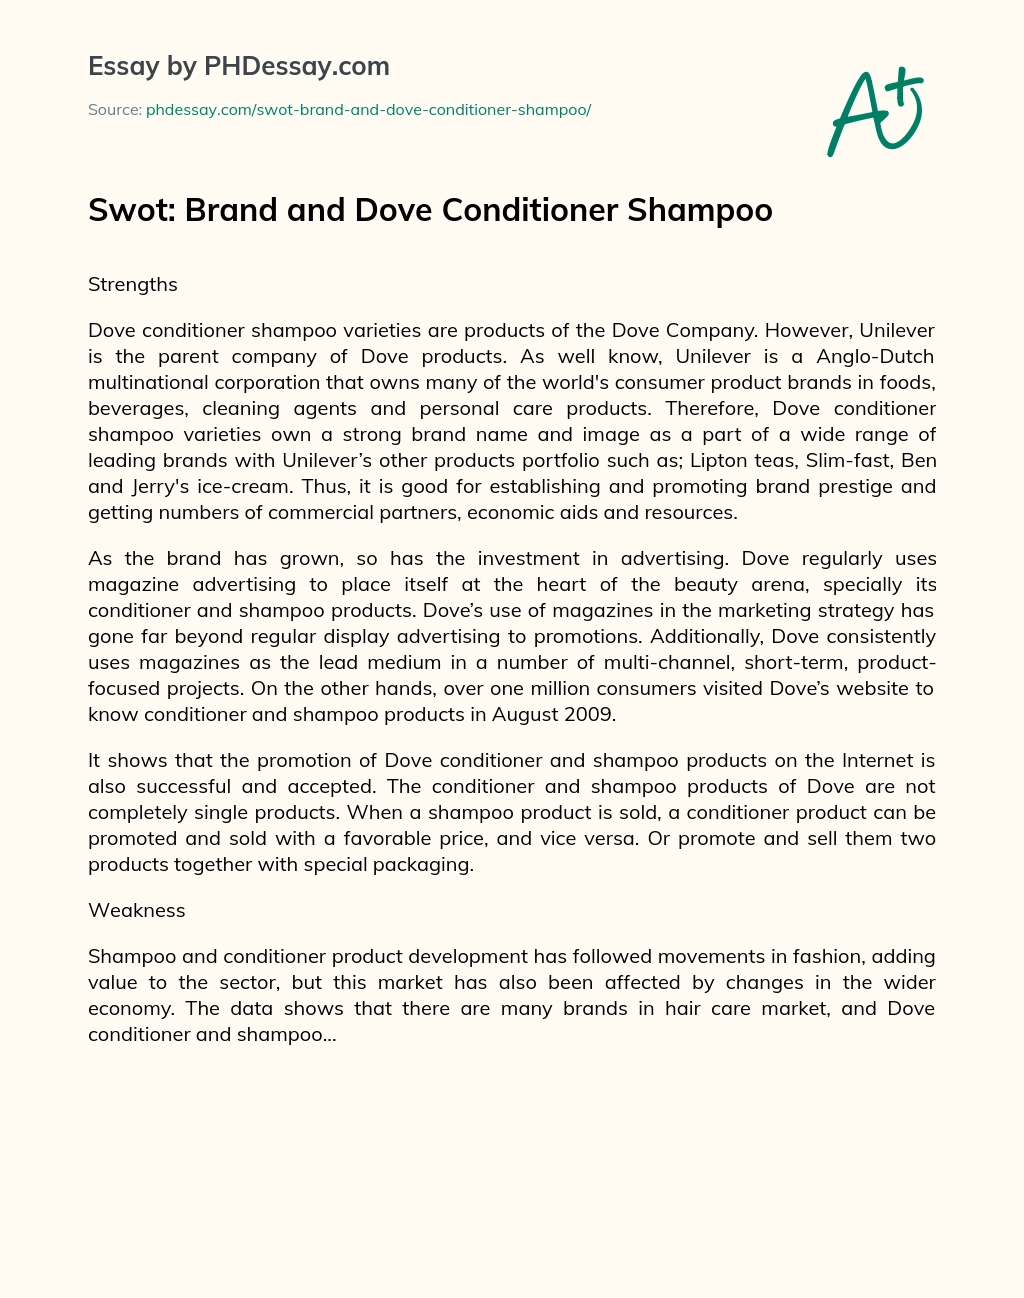 Swot: Brand and Dove Conditioner Shampoo essay